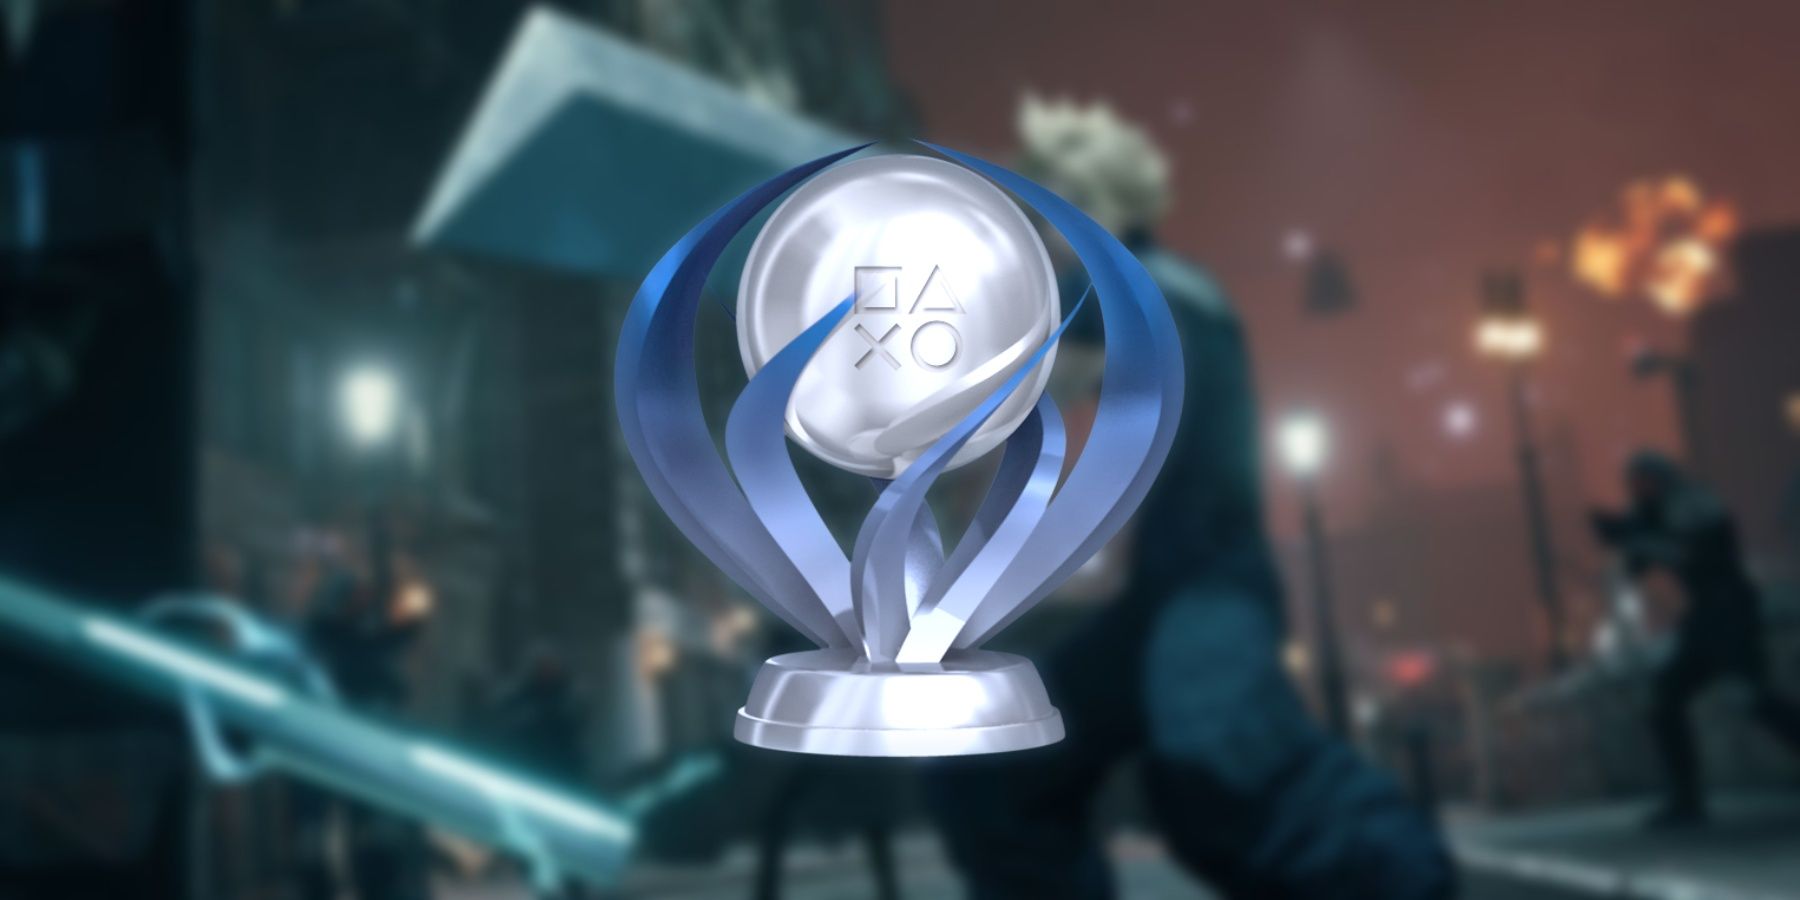 PlayStation Fan’s Impressive Trophy Milestone Celebrated With Neat Art Piece